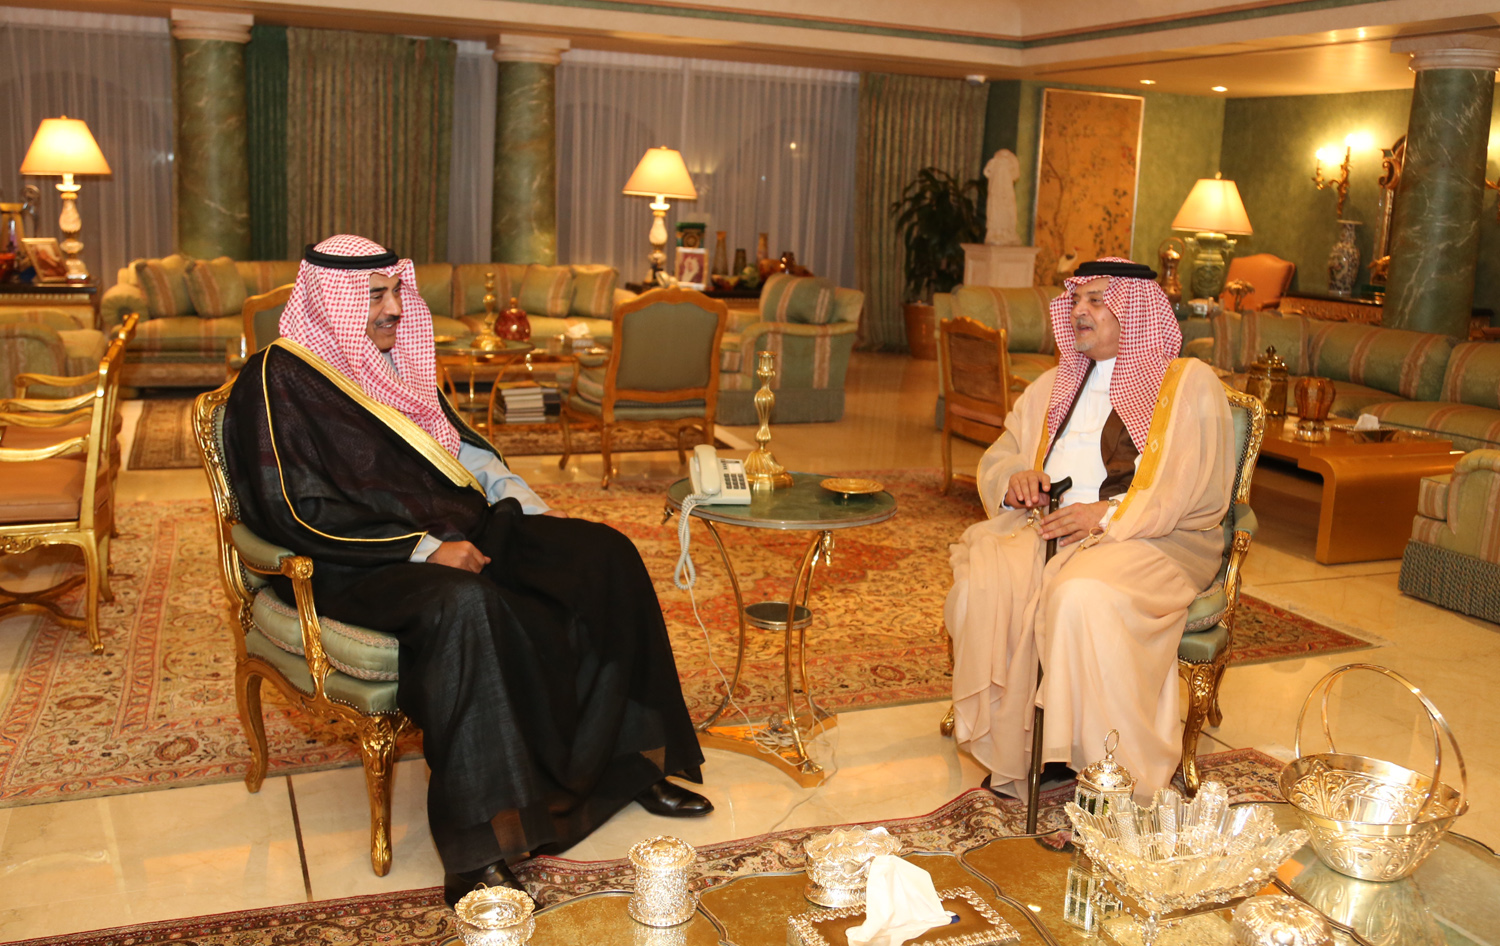 First Deputy Prime Minister and Foreign Minister Sheikh Sabah Khaled Al-Hamad Al-Sabah with Saudi Foreign Minister Prince Saud Al-Faisal